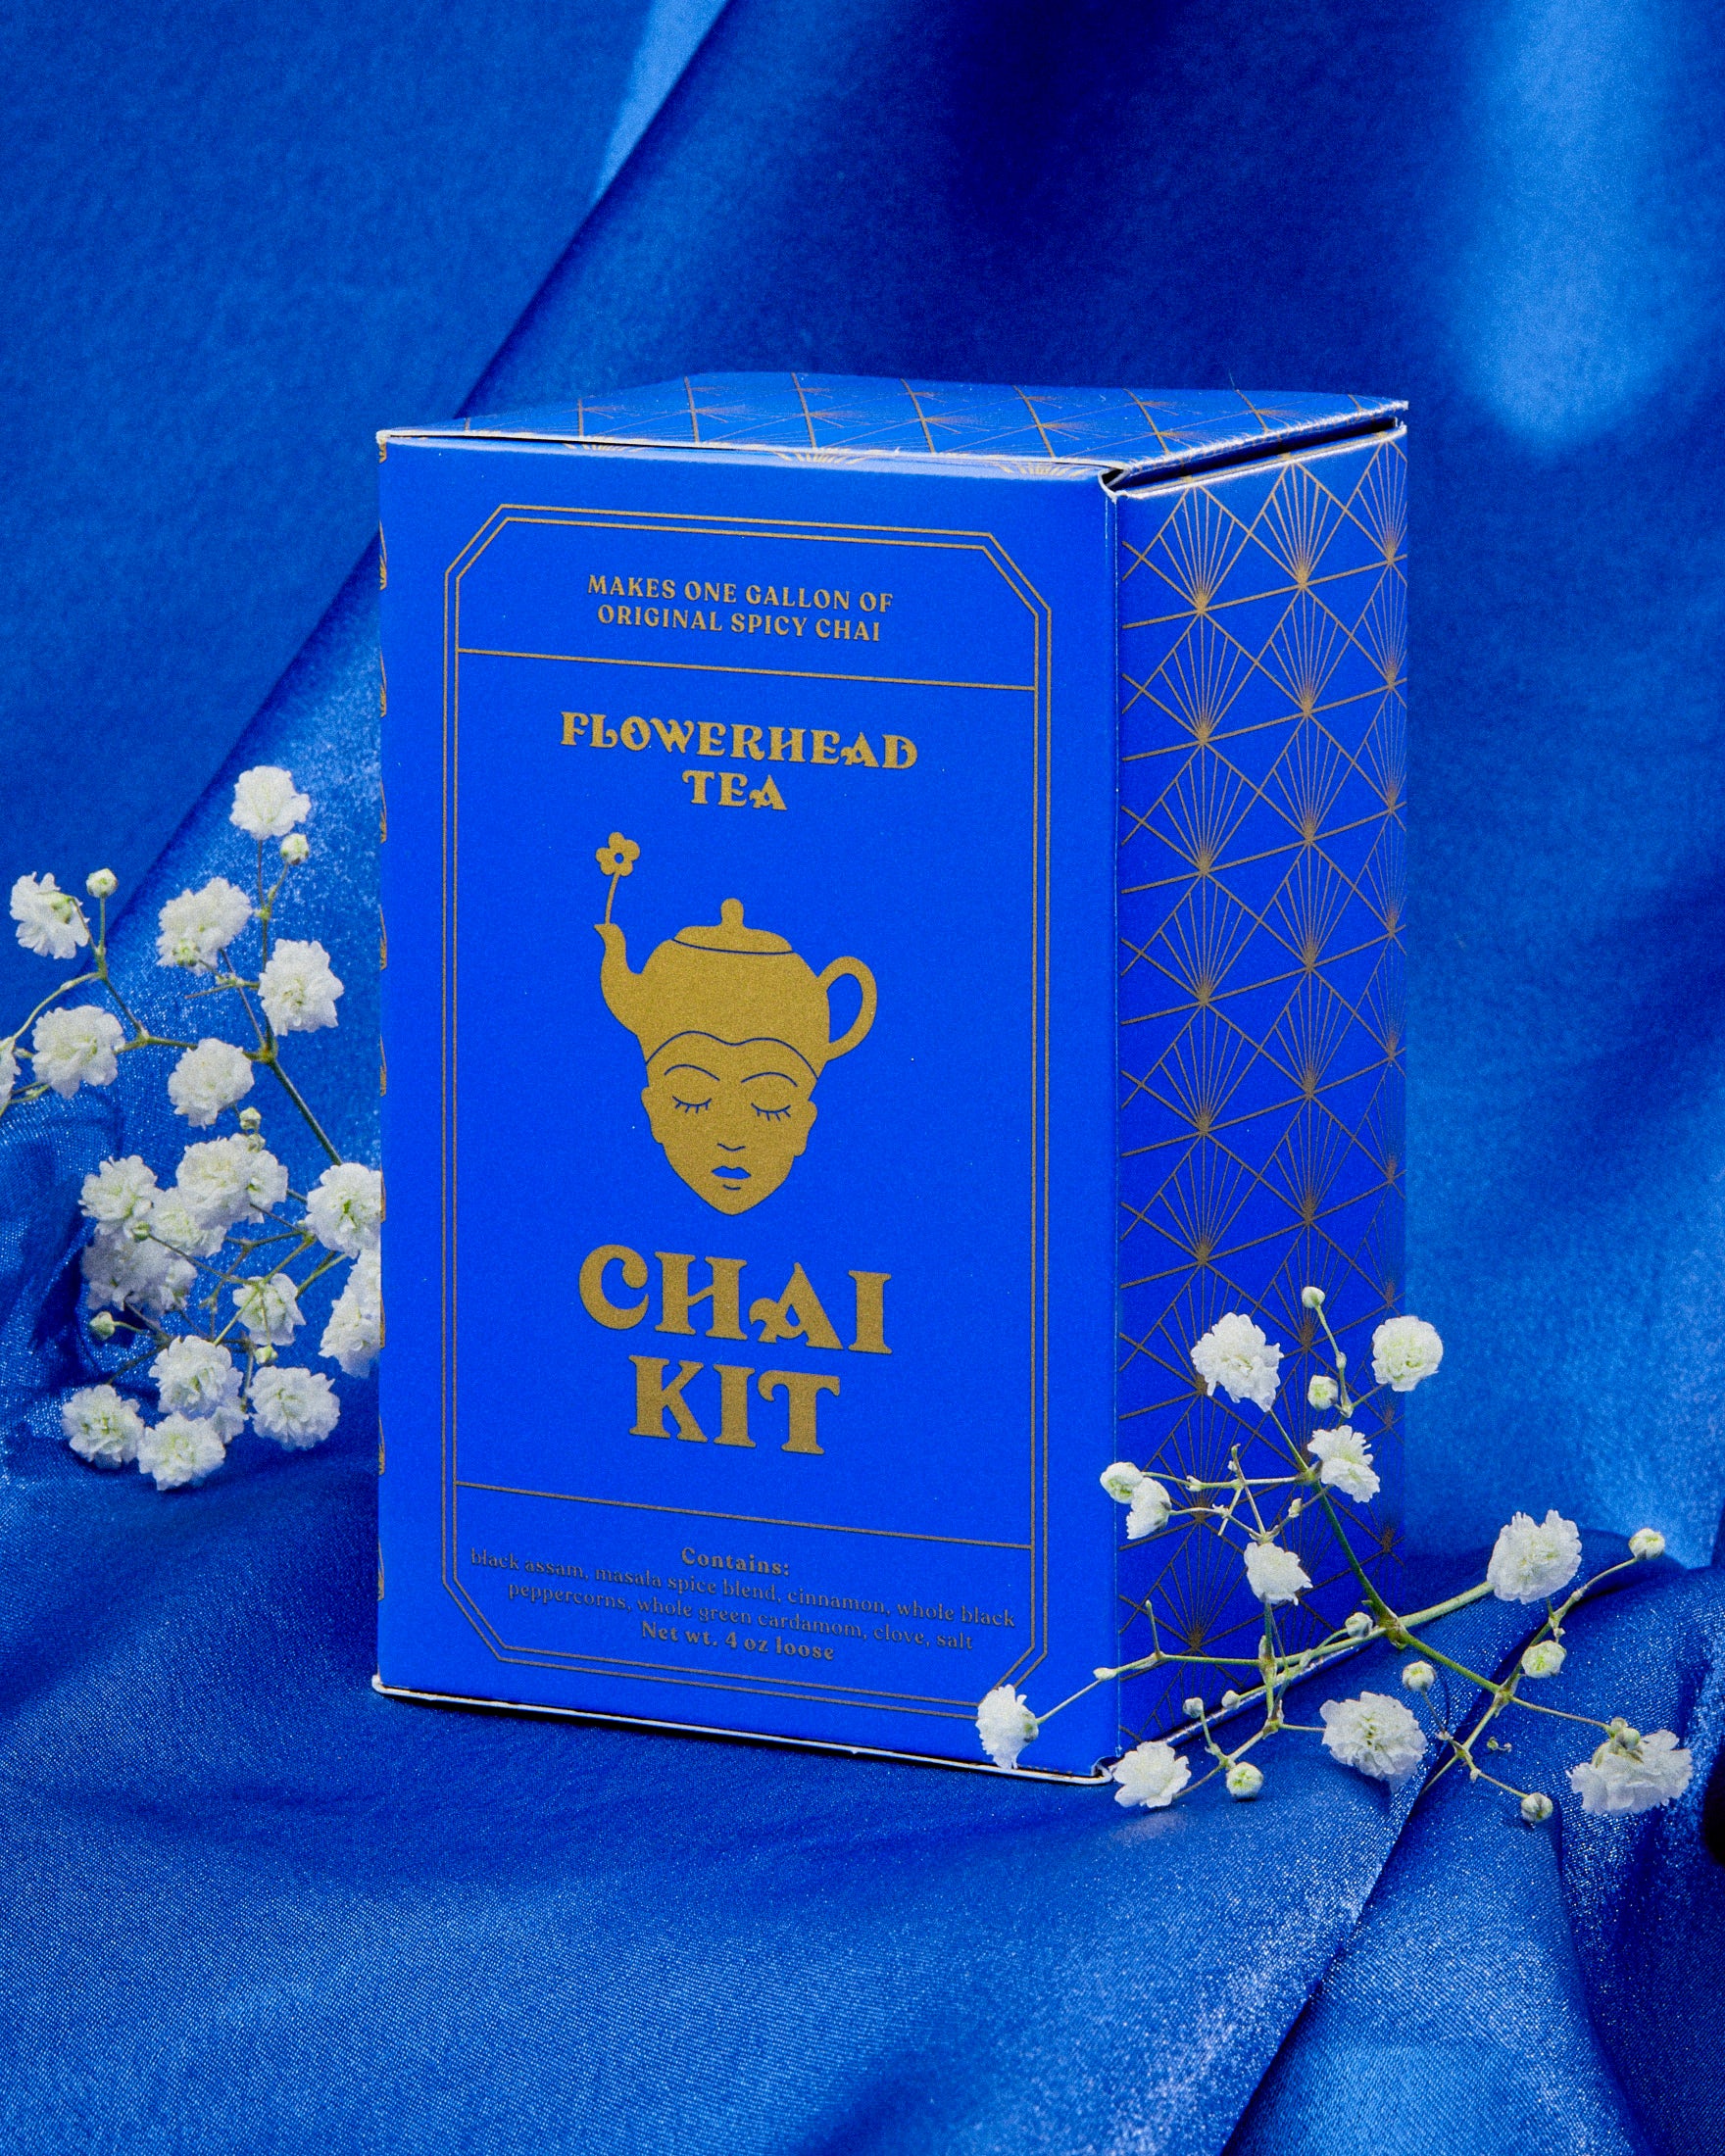 The Chai Kit